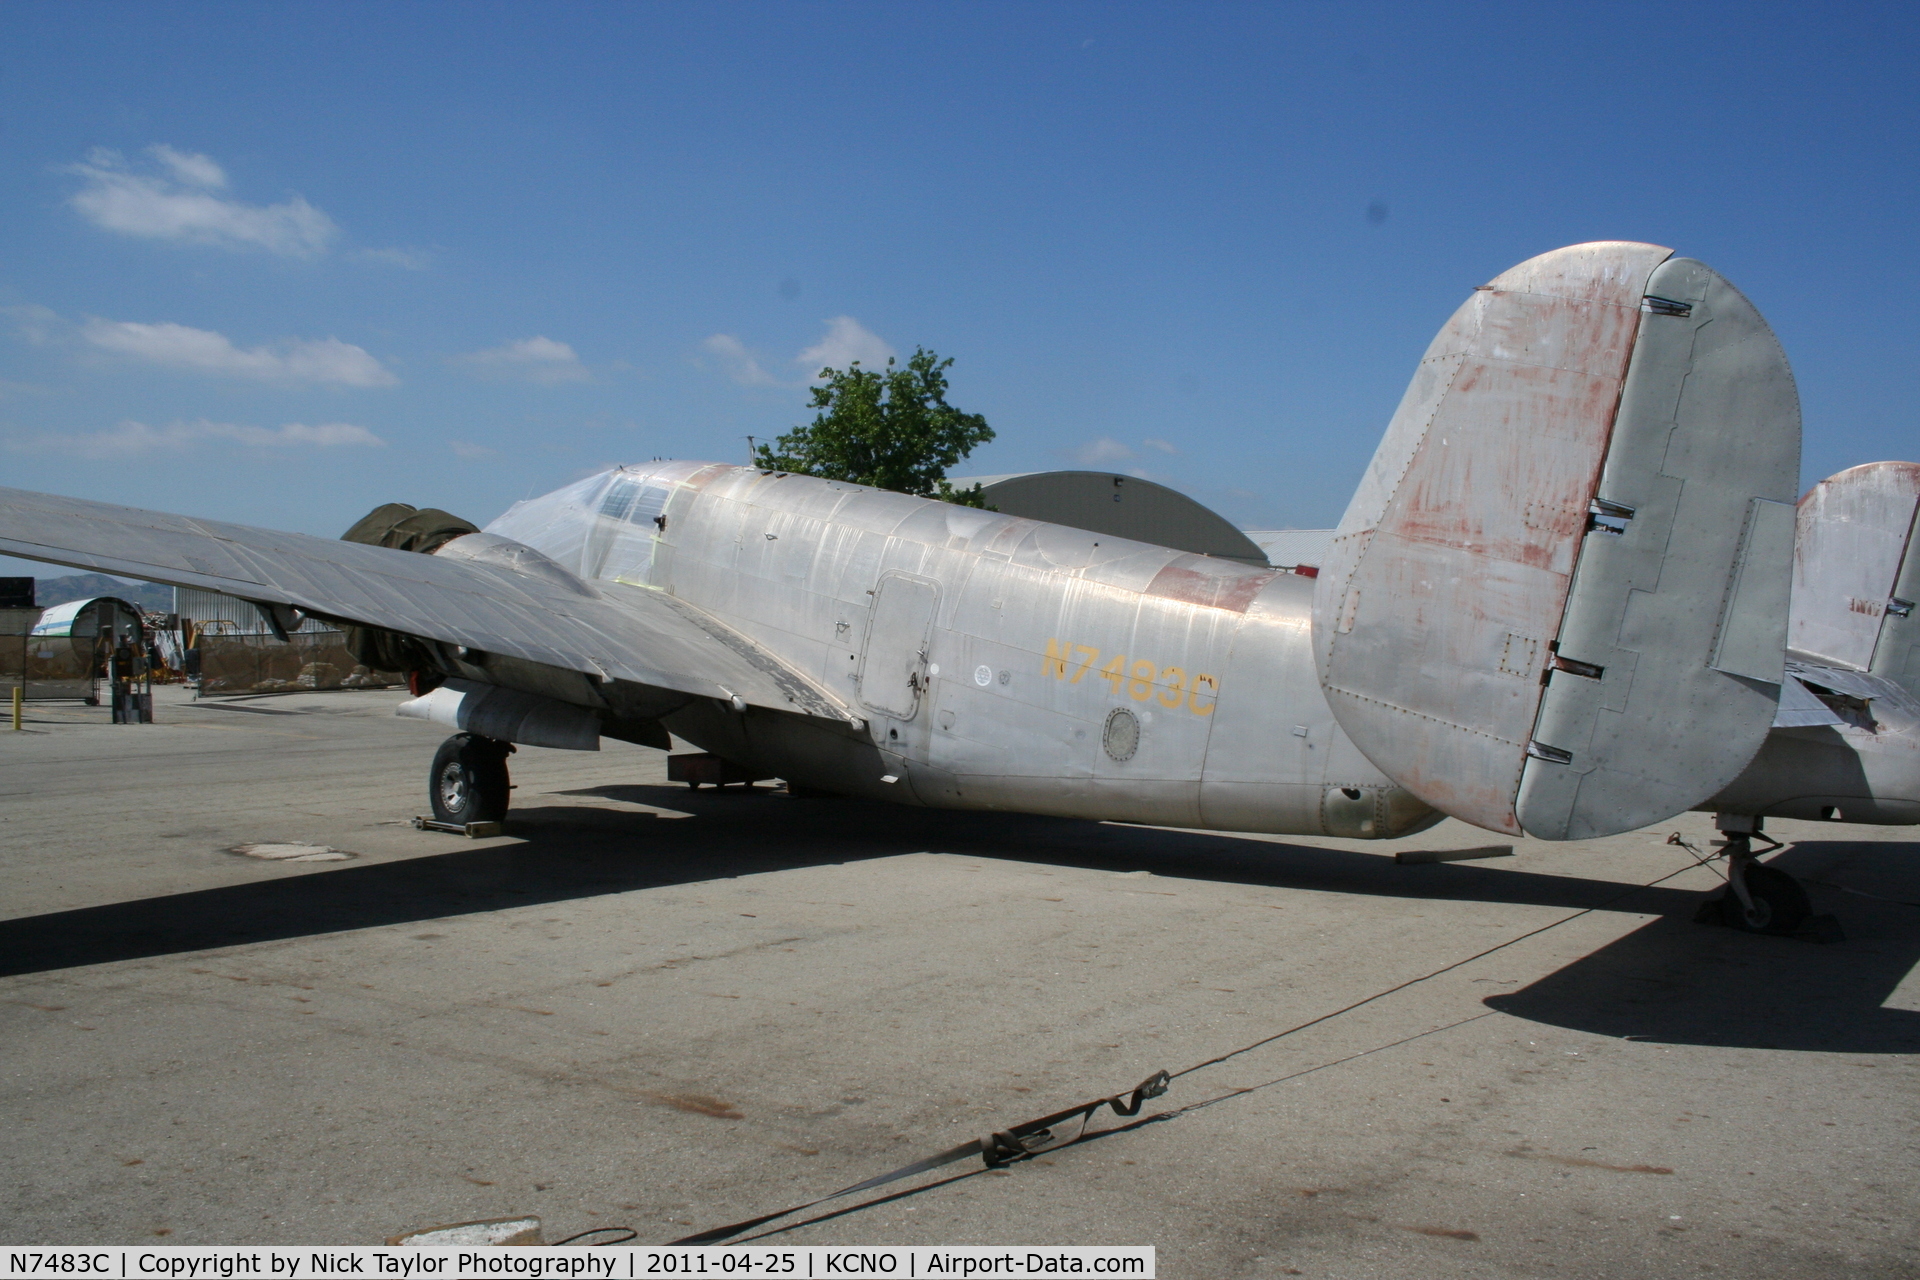 N7483C, 1964 Lockheed PV-2 Harpoon C/N 15-1168, Chino is full of treasure like this old PV-2 Harpoon